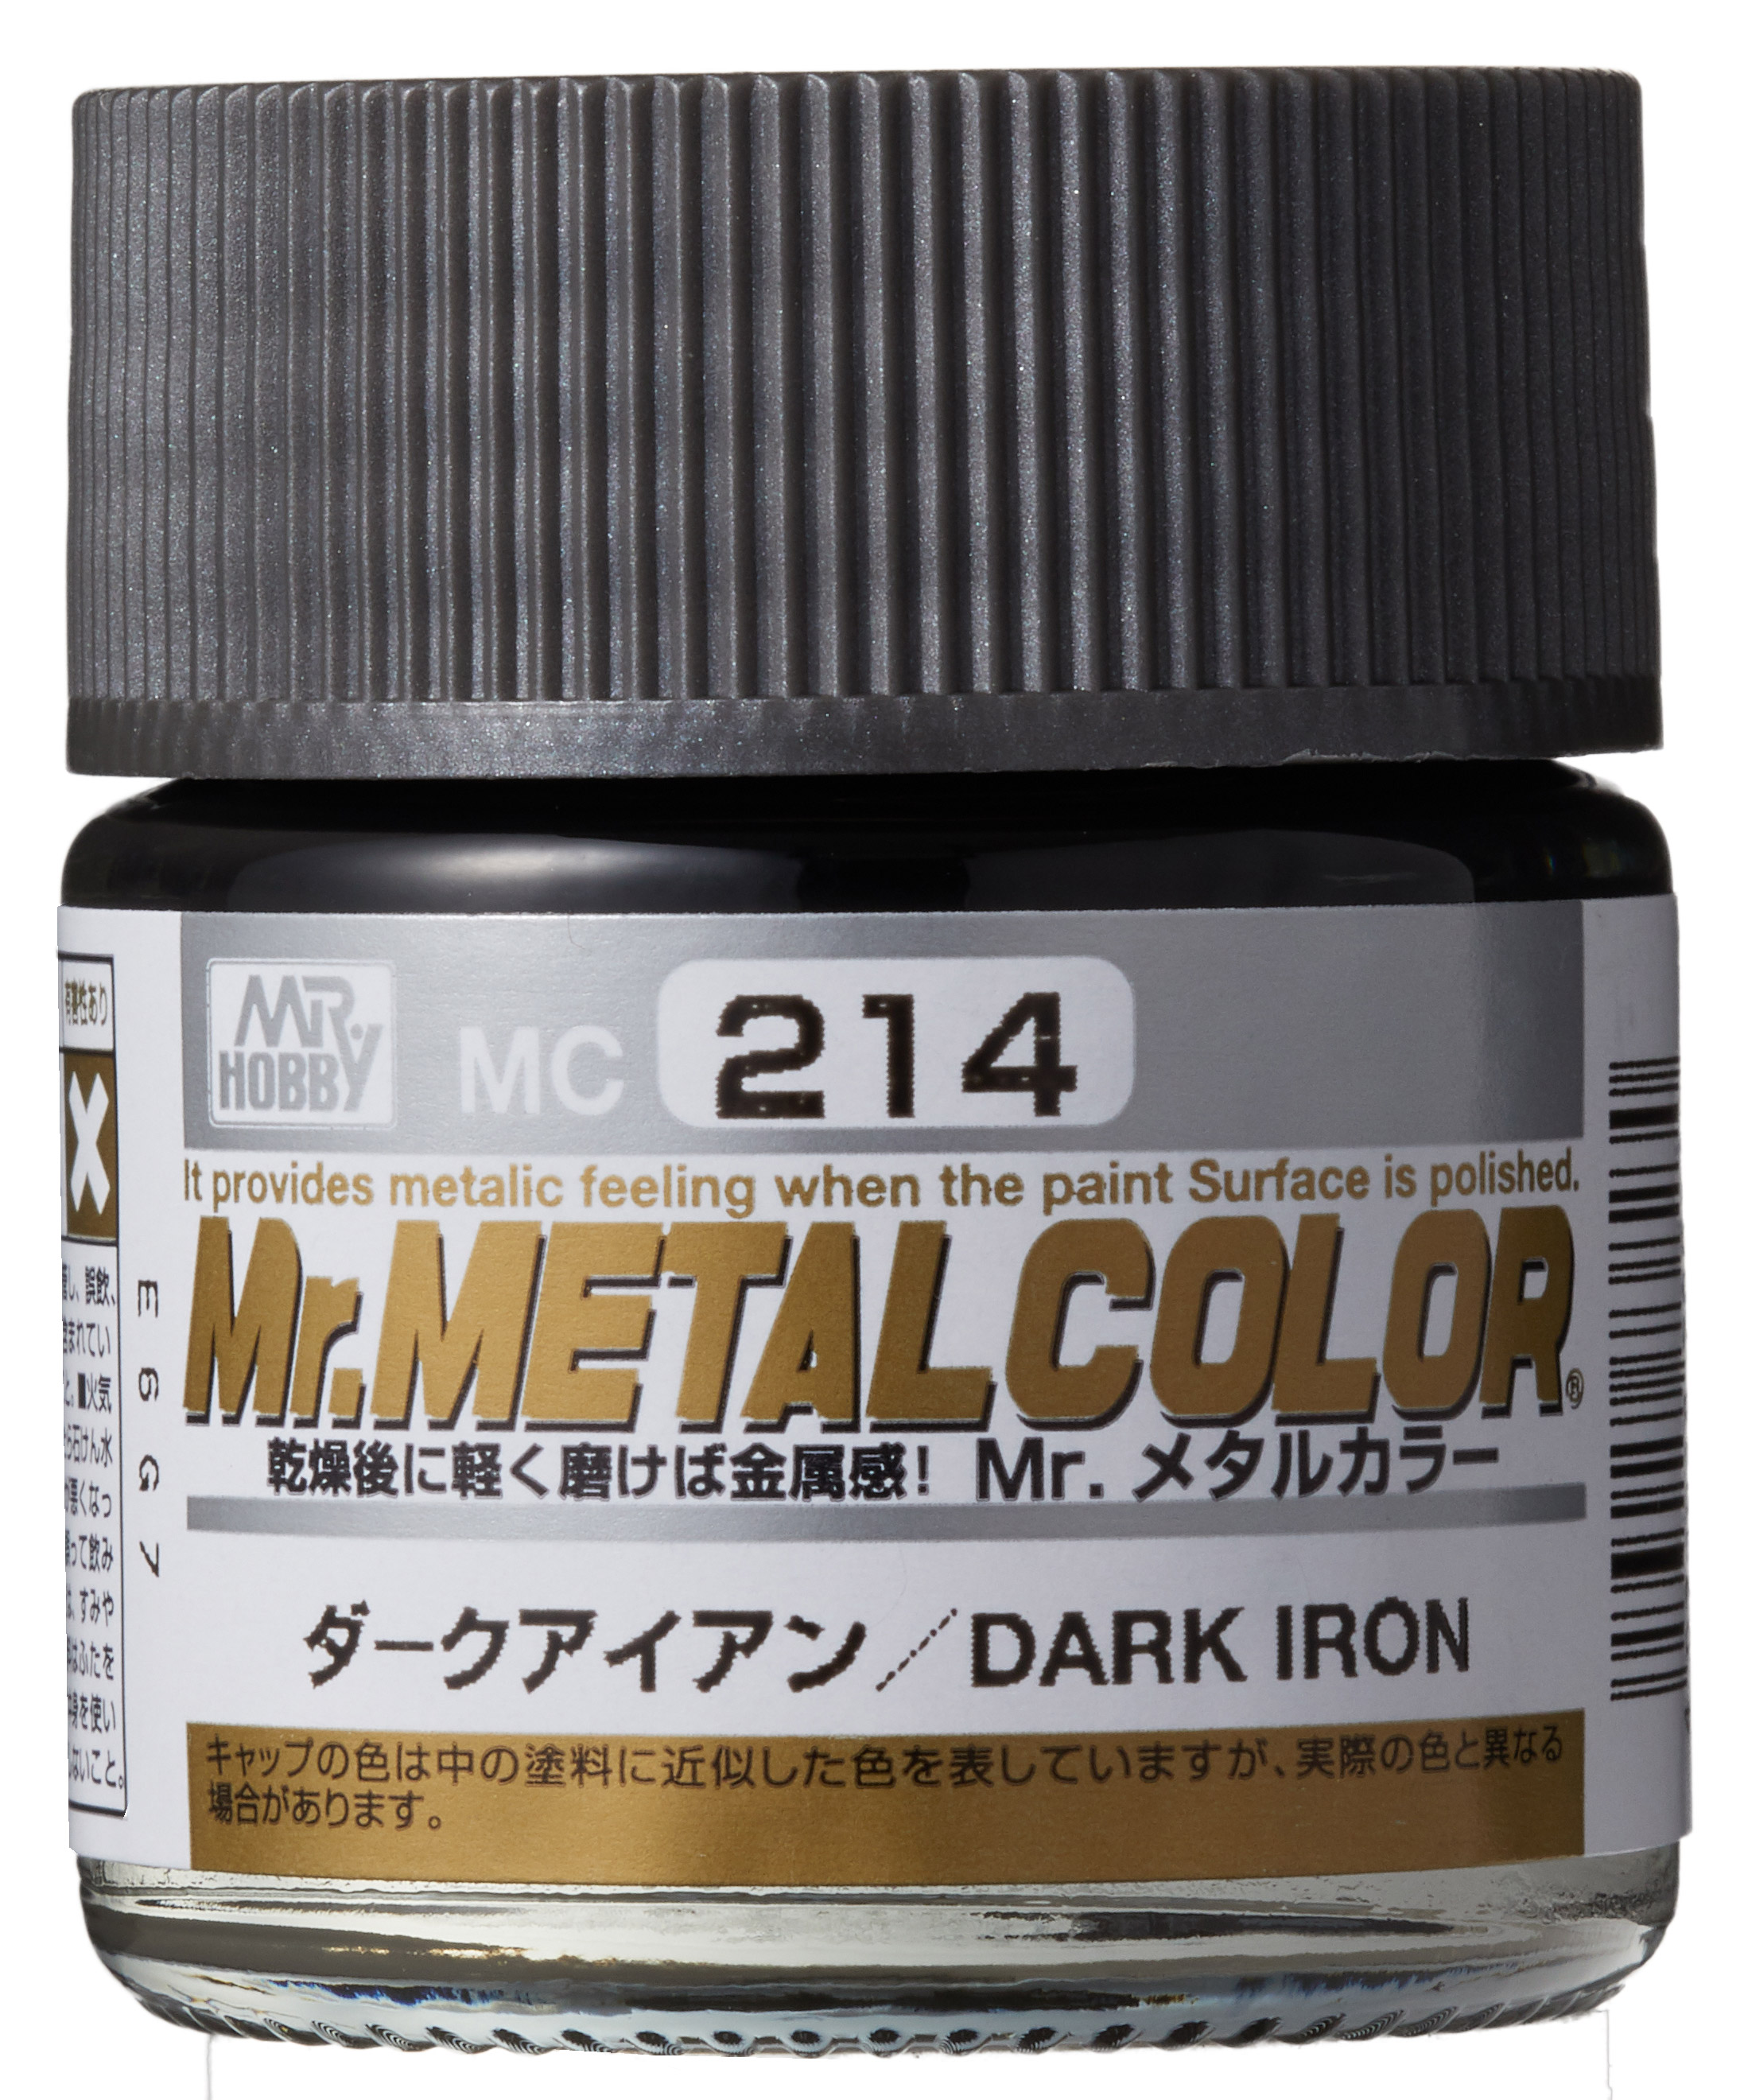 Pot of Mr. Metal Color Dark Iron Paint